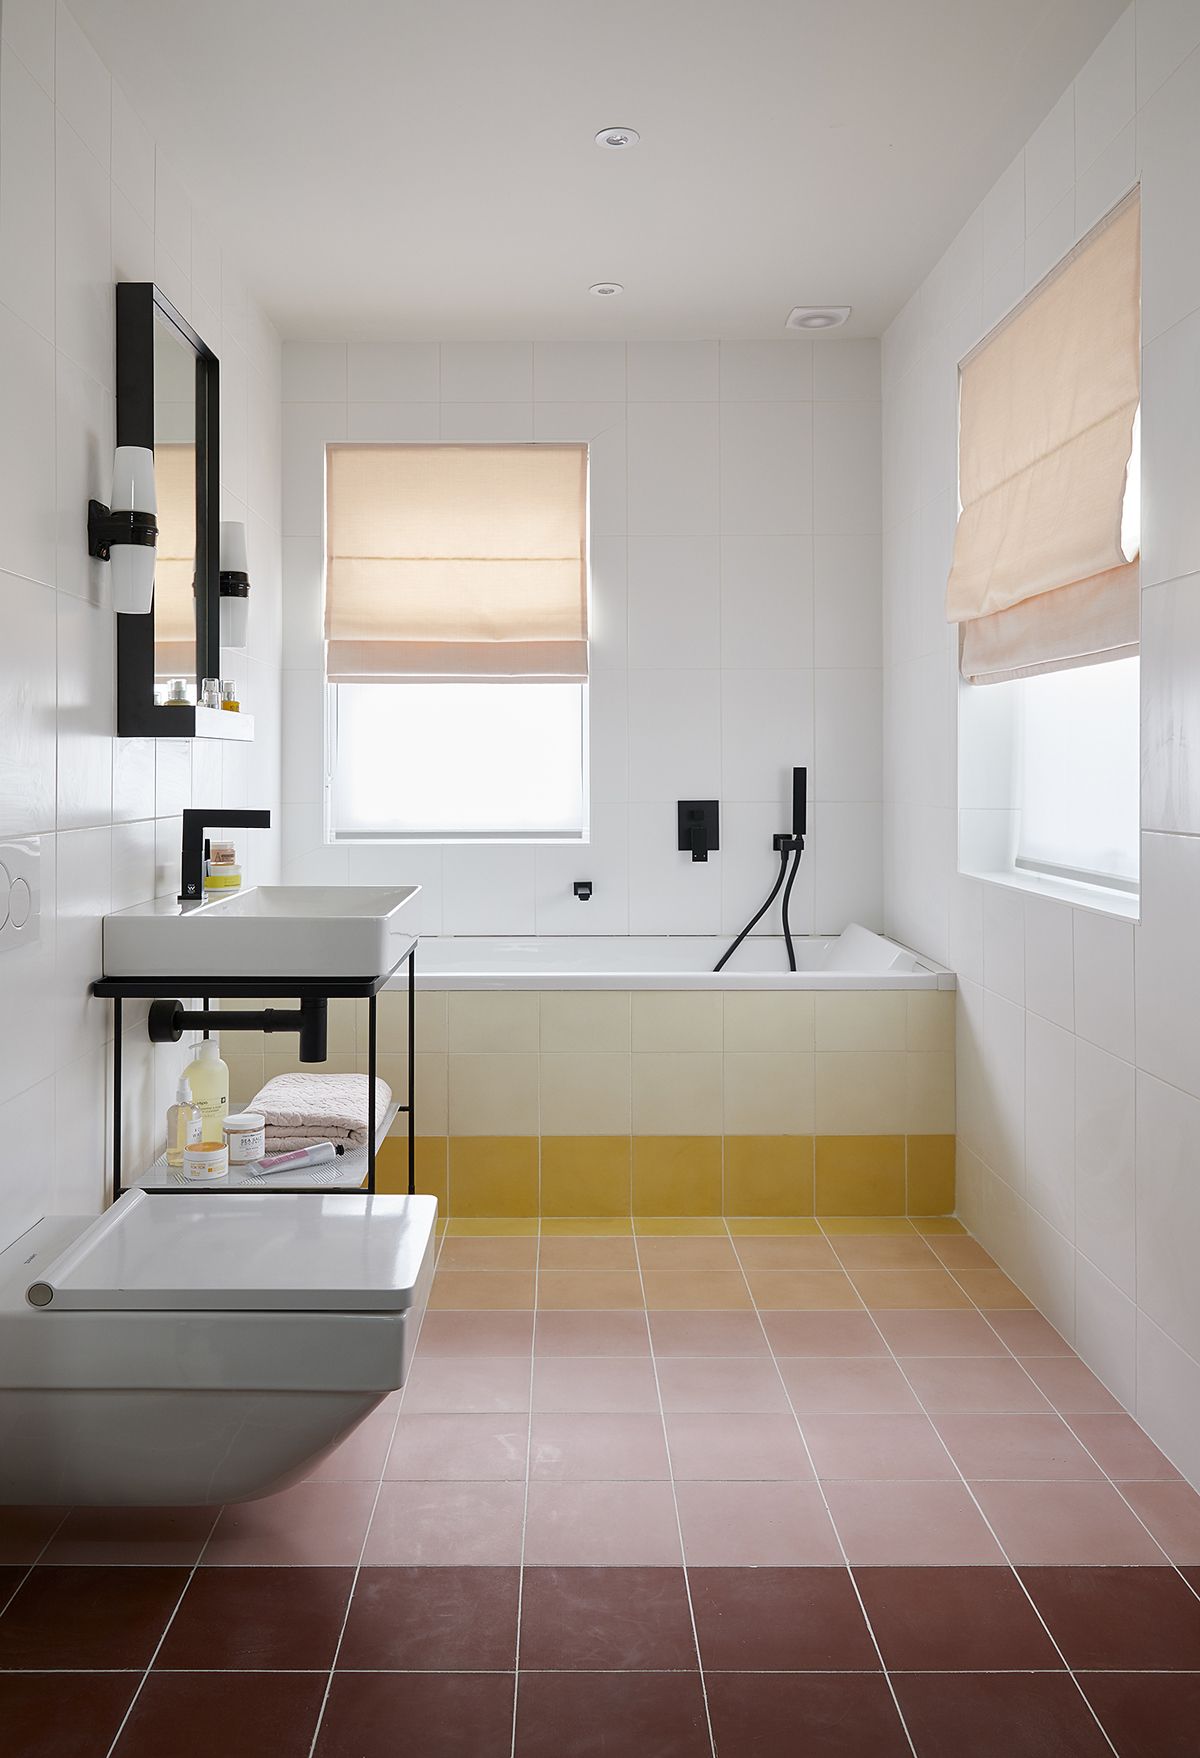 Small Bathroom Design Ideas 16 Ways To